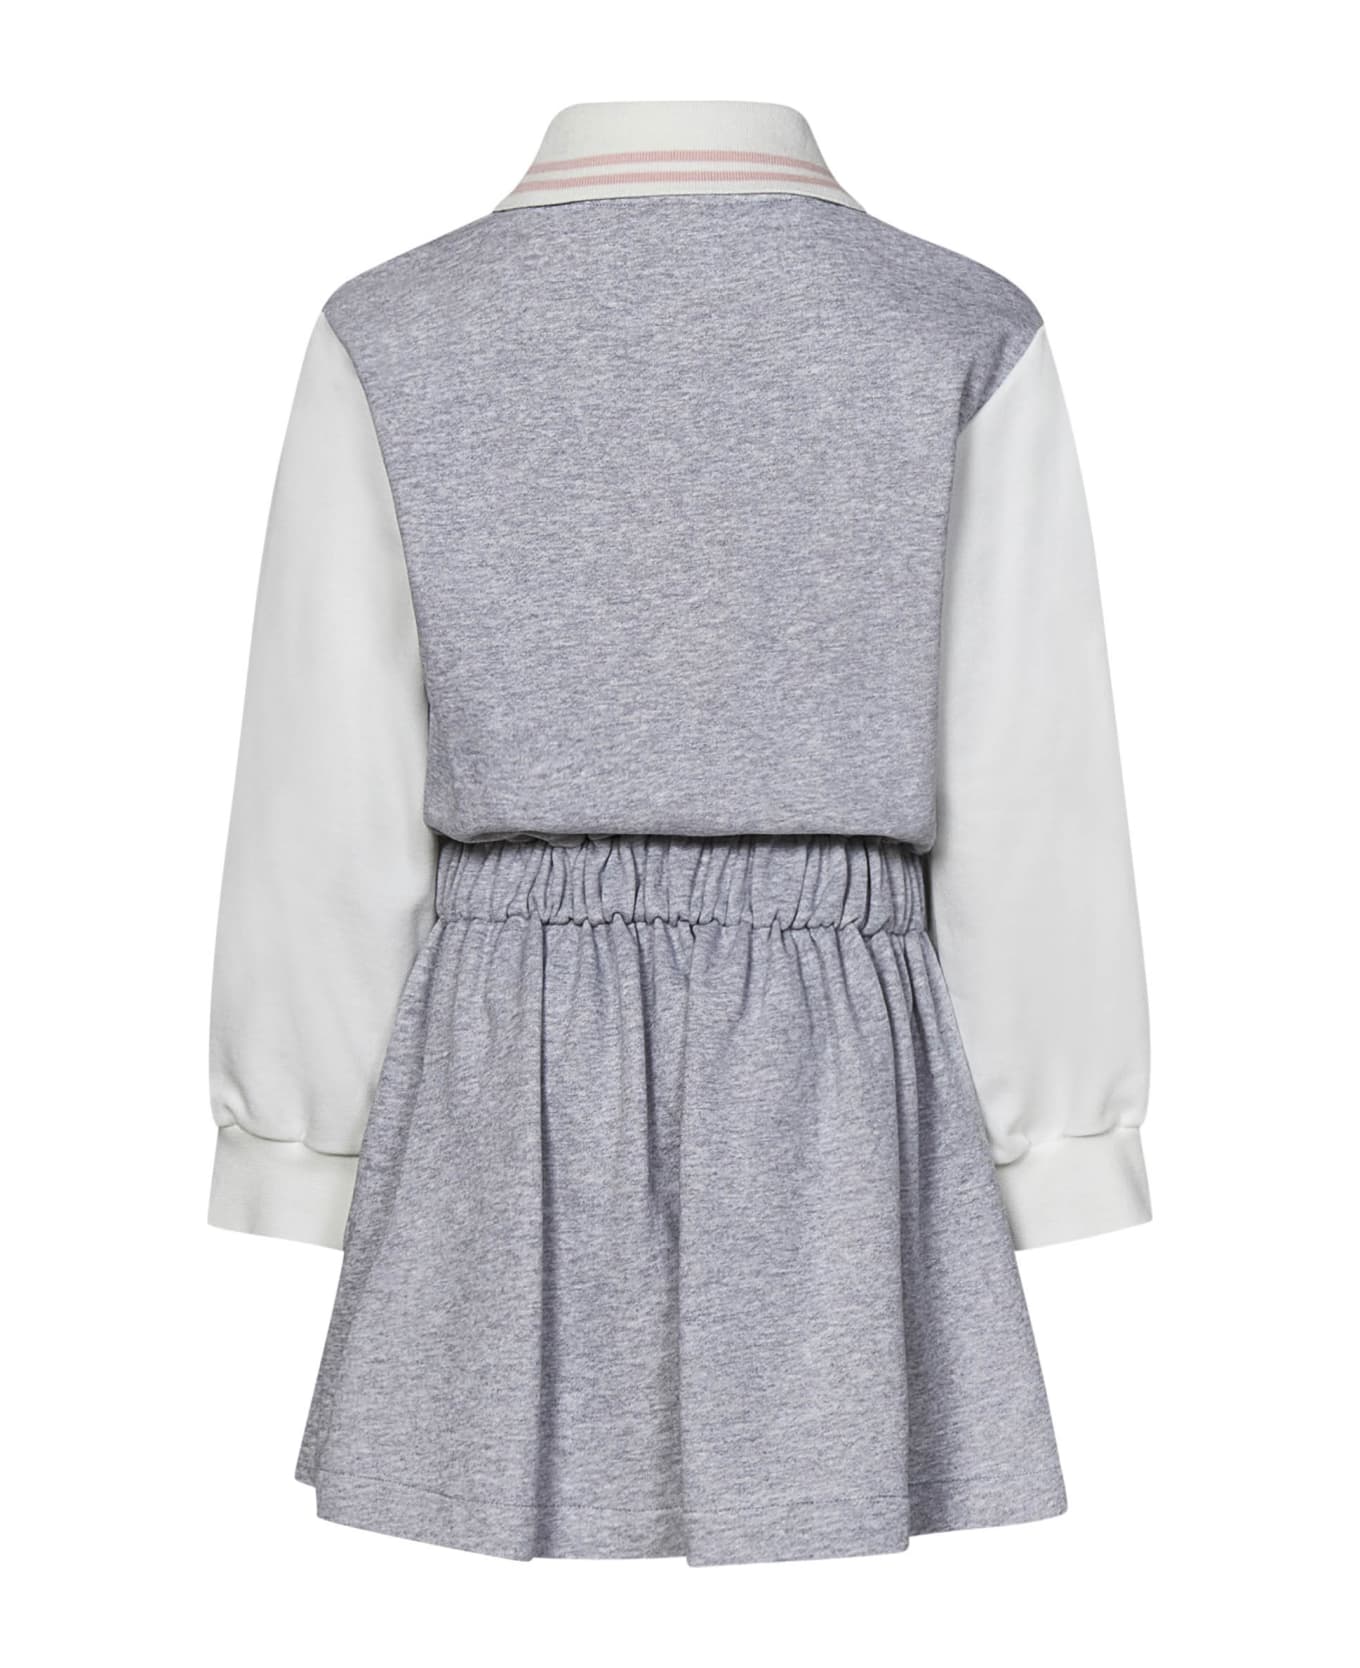 Fendi Kids Dress - Grey ワンピース＆ドレス